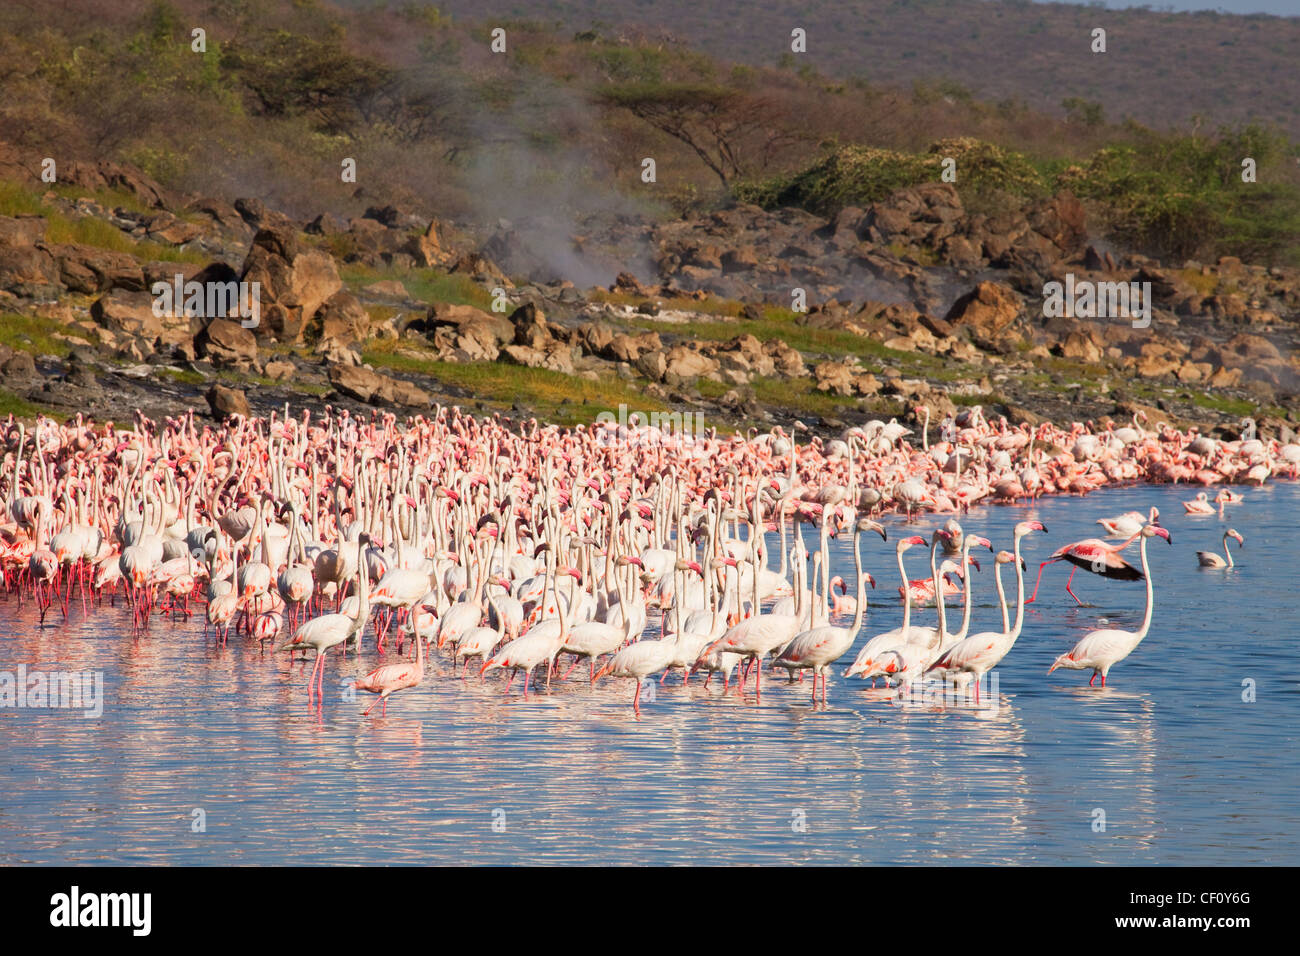 Africa, Kenya, Lake Bogoria nature reserve, Greater and lesser Flamingo flocks in Lake Begoria, Soda lake with spouting geysers Stock Photo